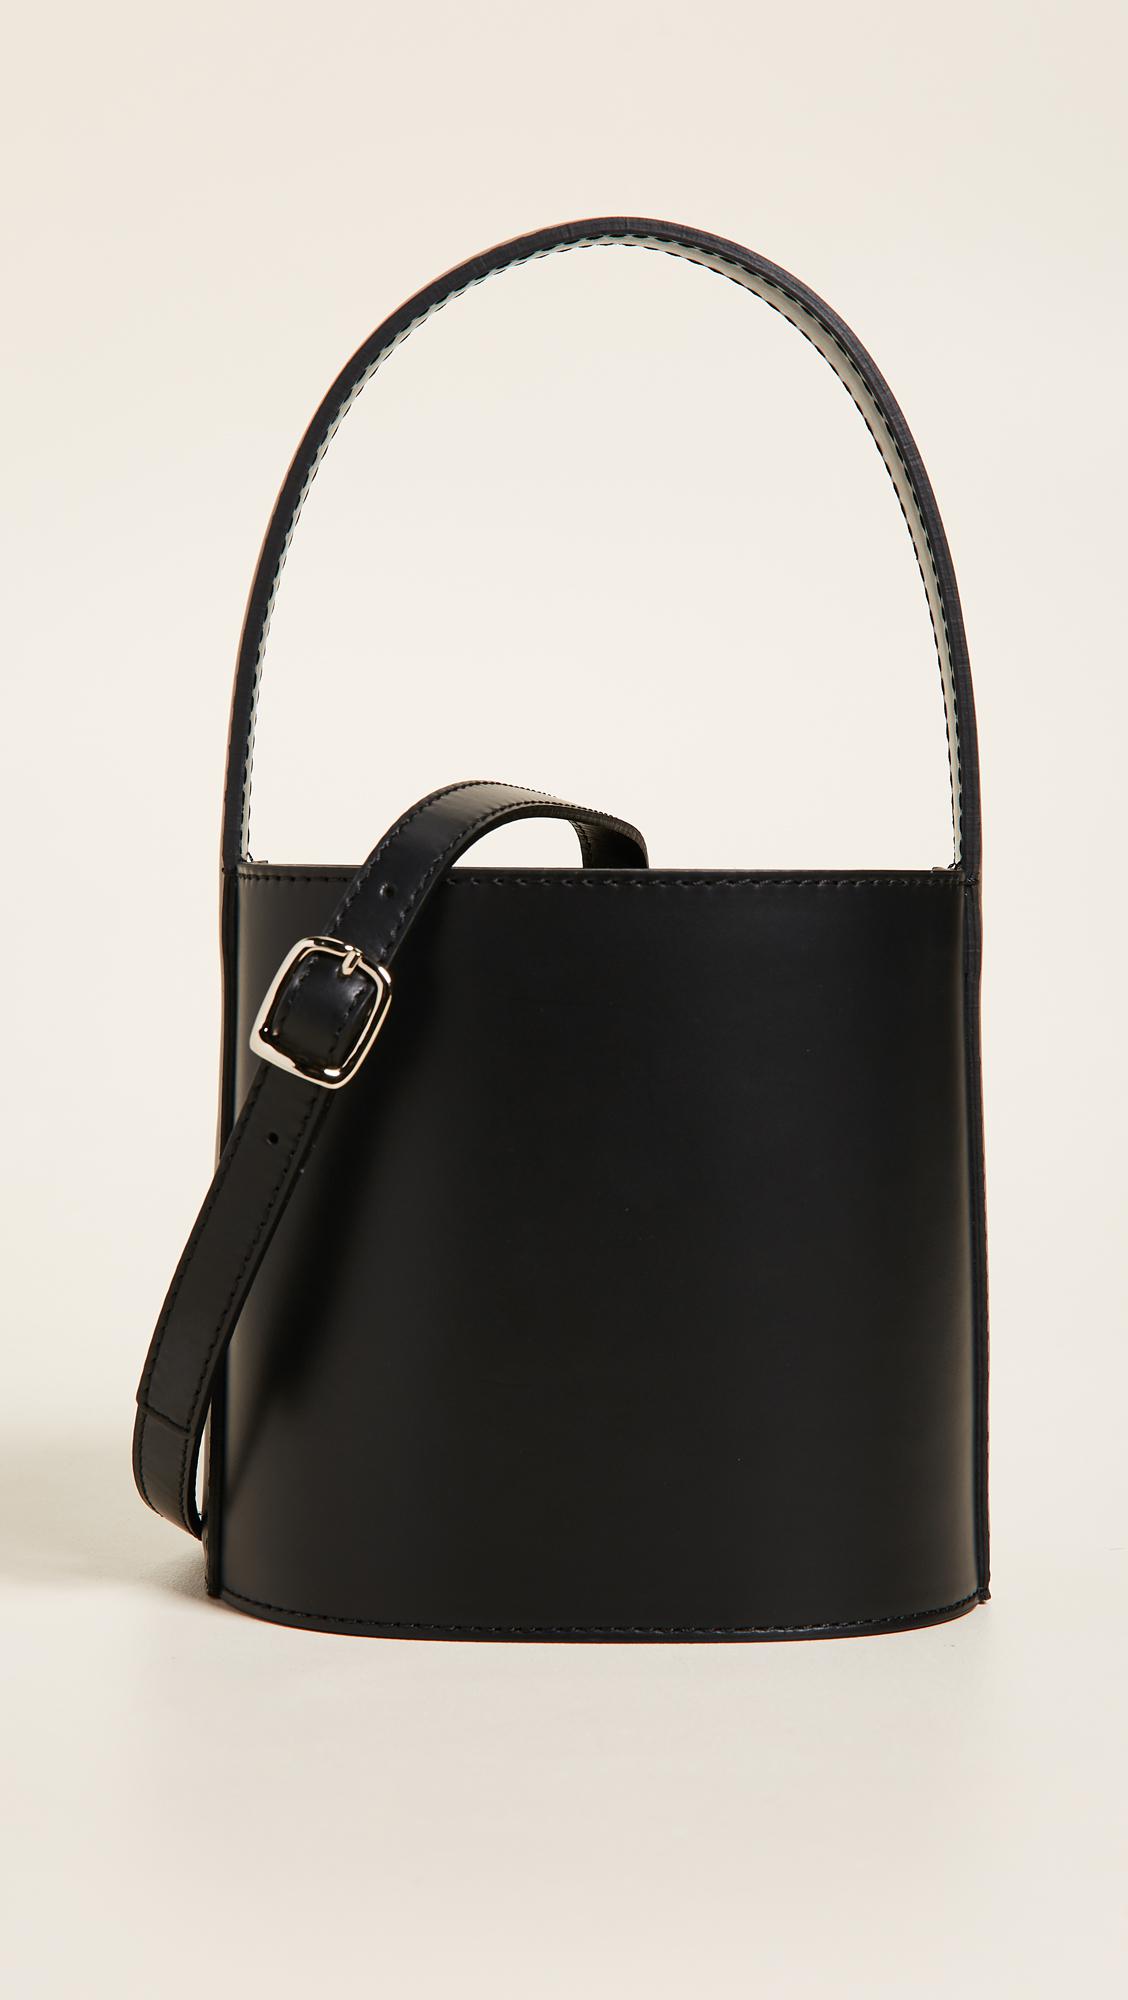 STAUD Leather Bissett Bag in Black - Lyst